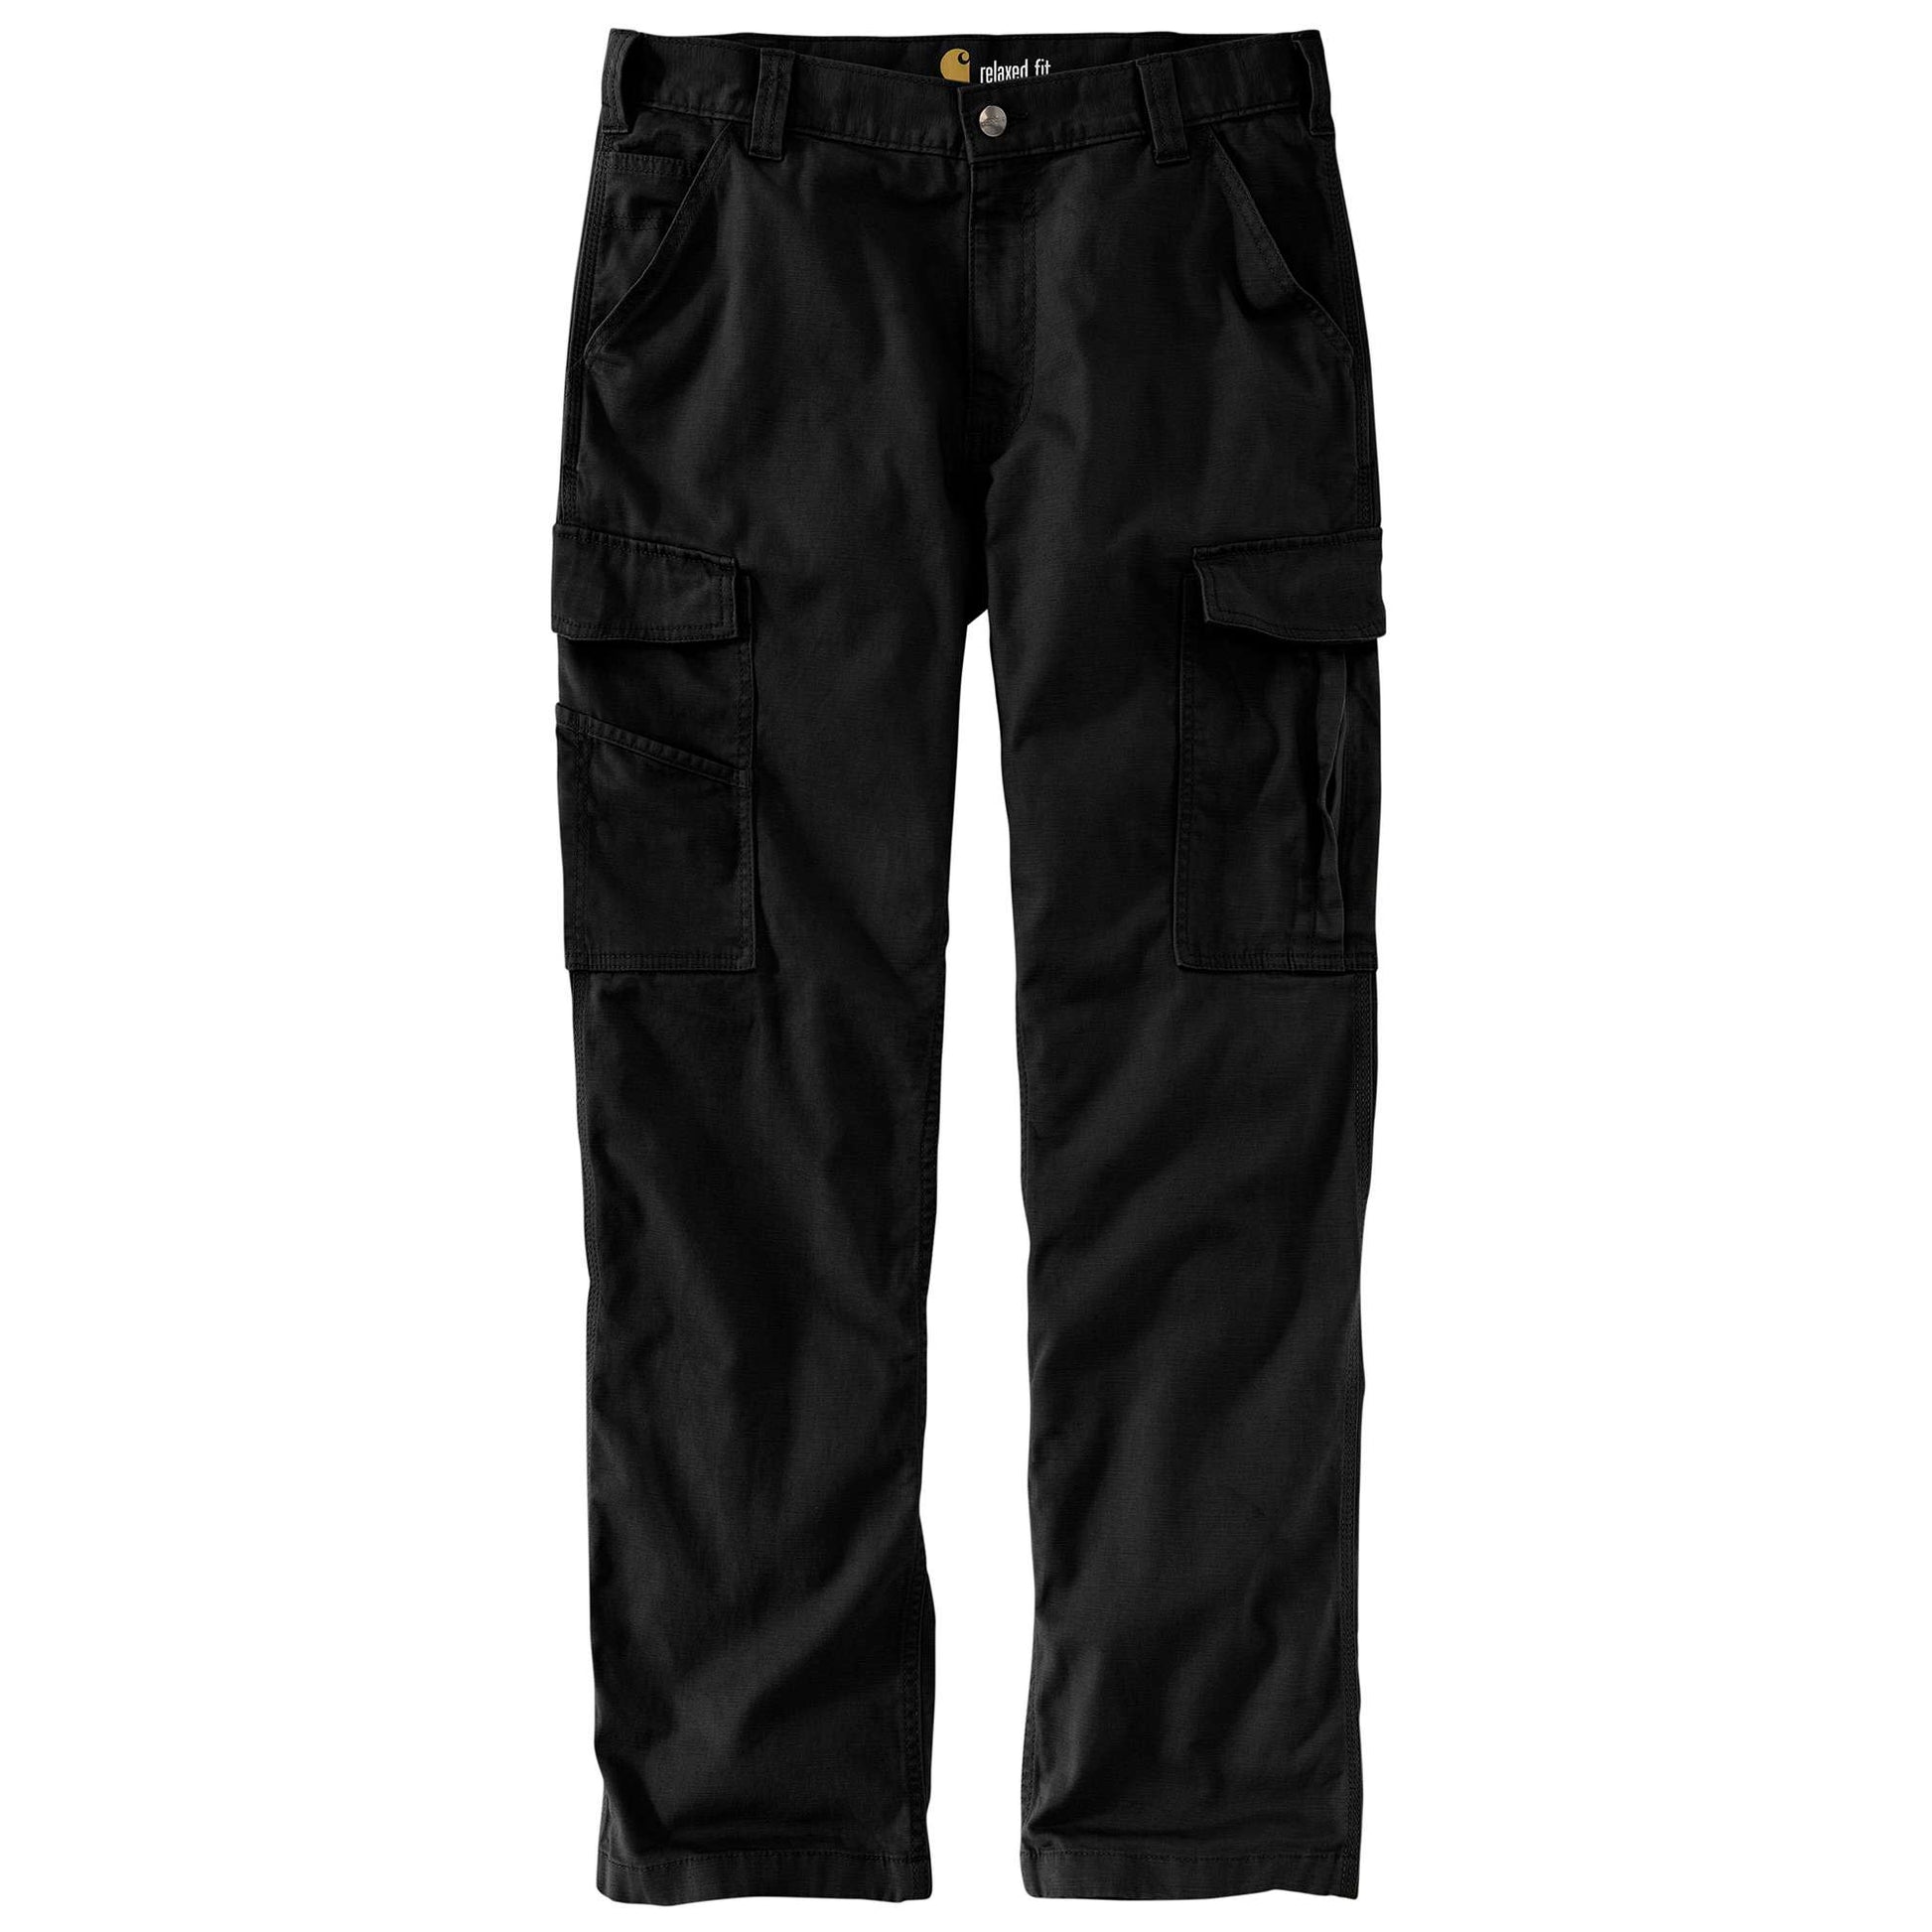 Wrangler Men's Relaxed Fit Flex Cargo Pants - Khaki 38x32 : Target